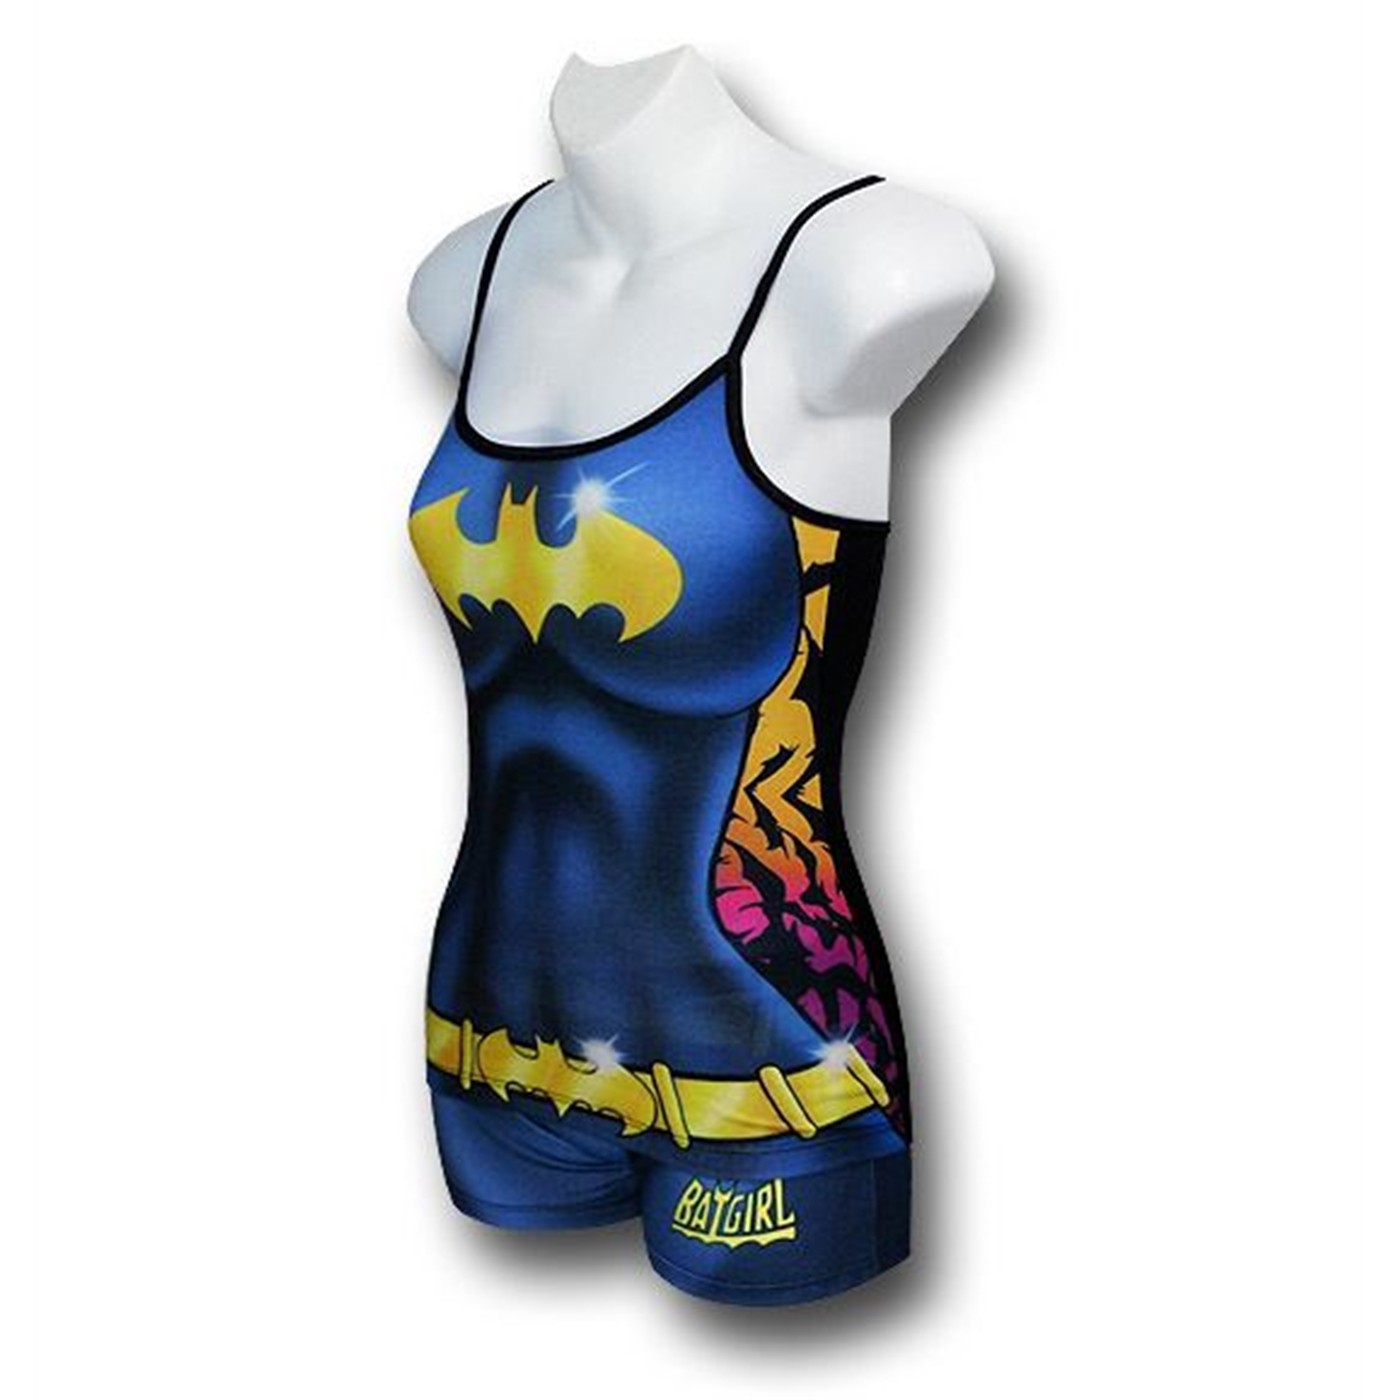 Batgirl Women's Costume Cami and Boyshorts Set